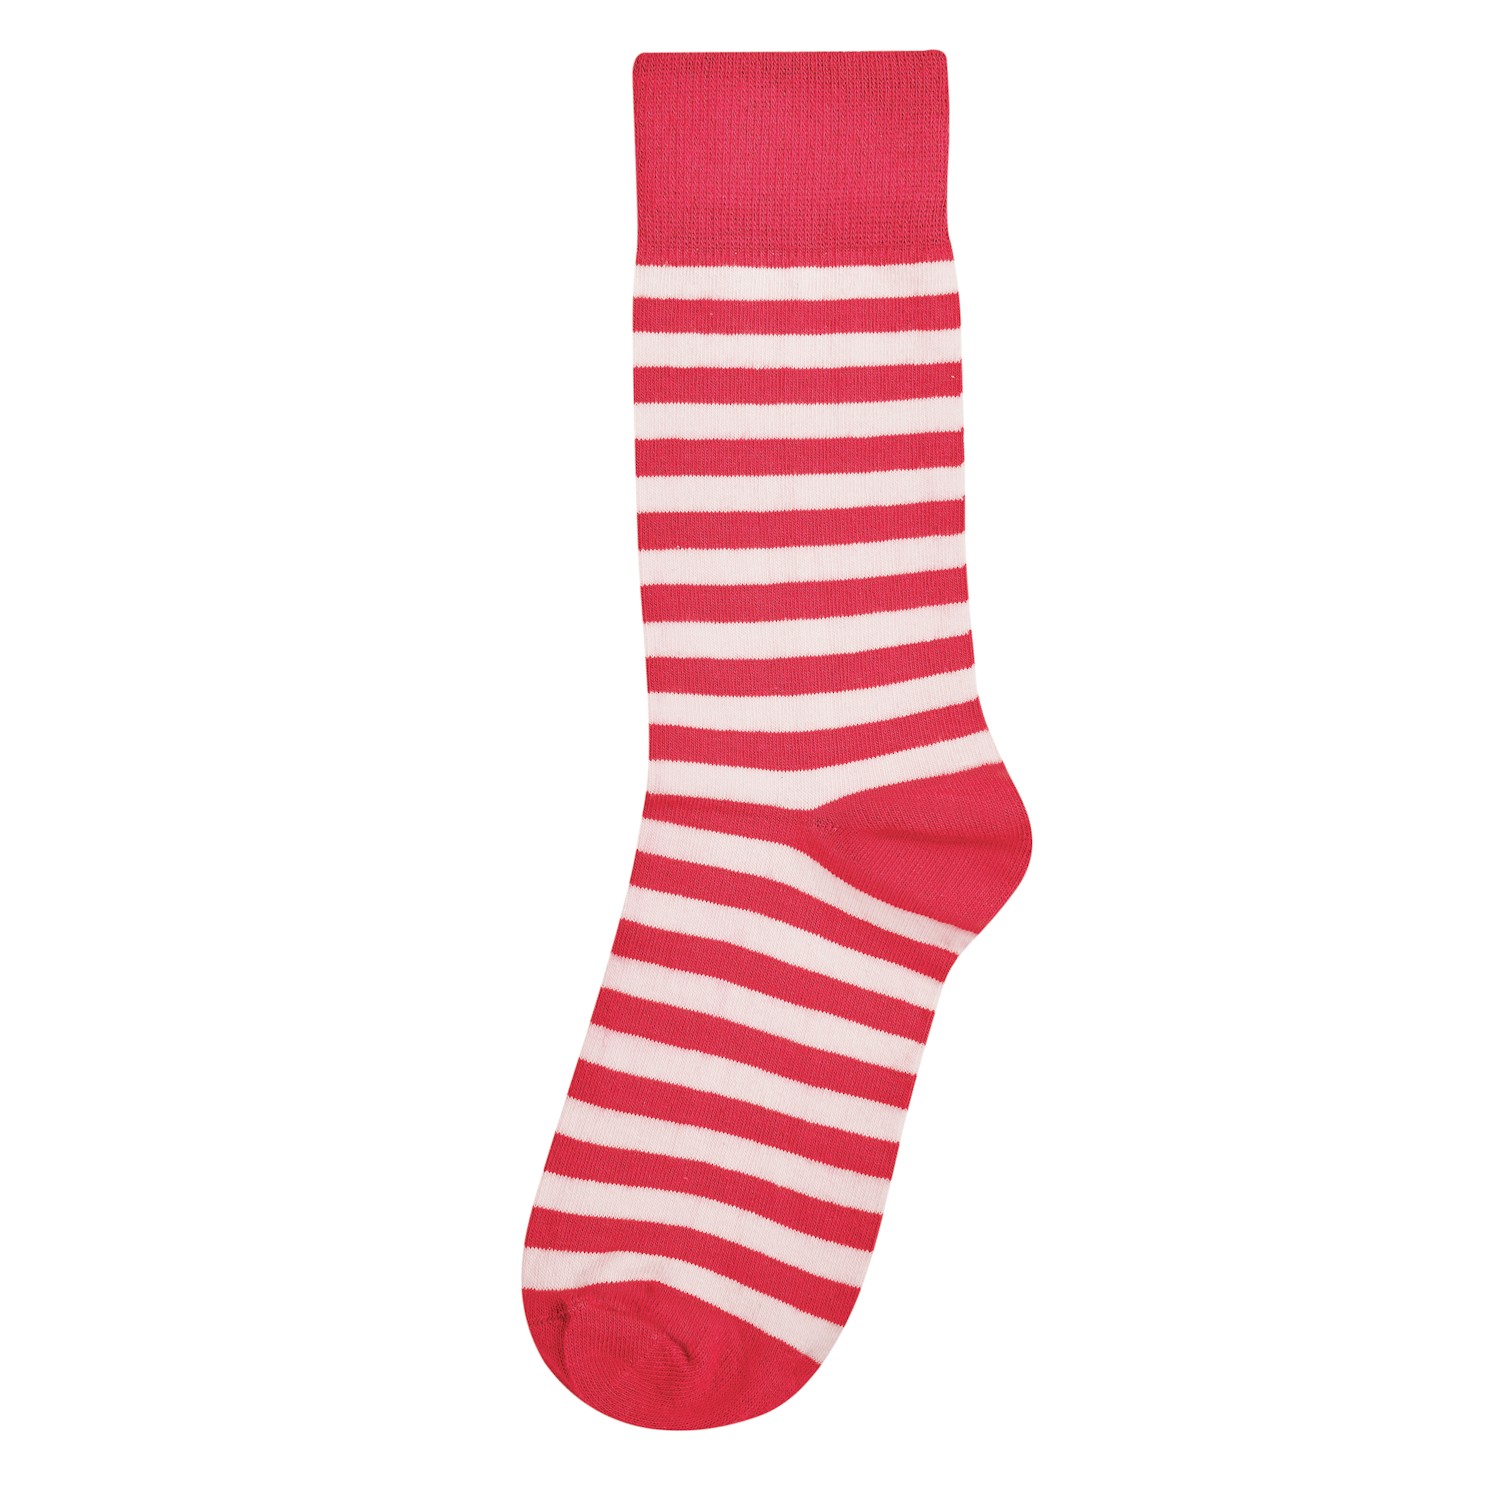 Stripes and Polka Dots Socks Collection | Signals